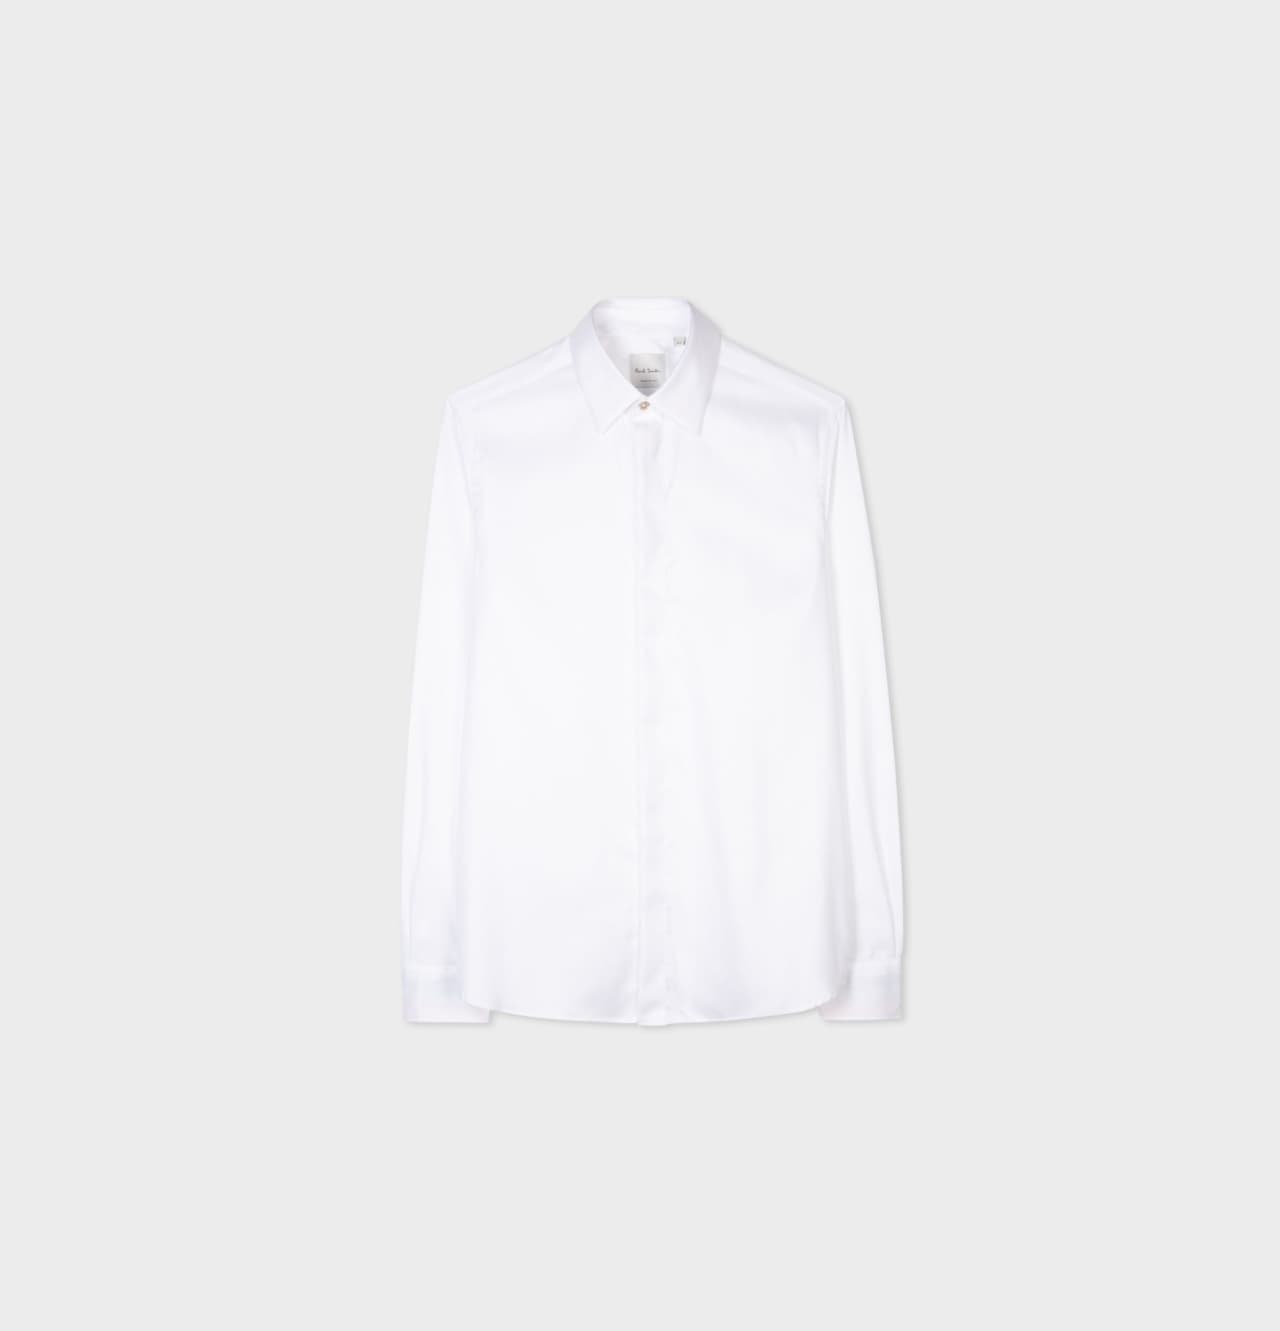 vincenzo boretti Long Sleeve Shirt white casual look Fashion Formal Shirts Long Sleeve Shirts 